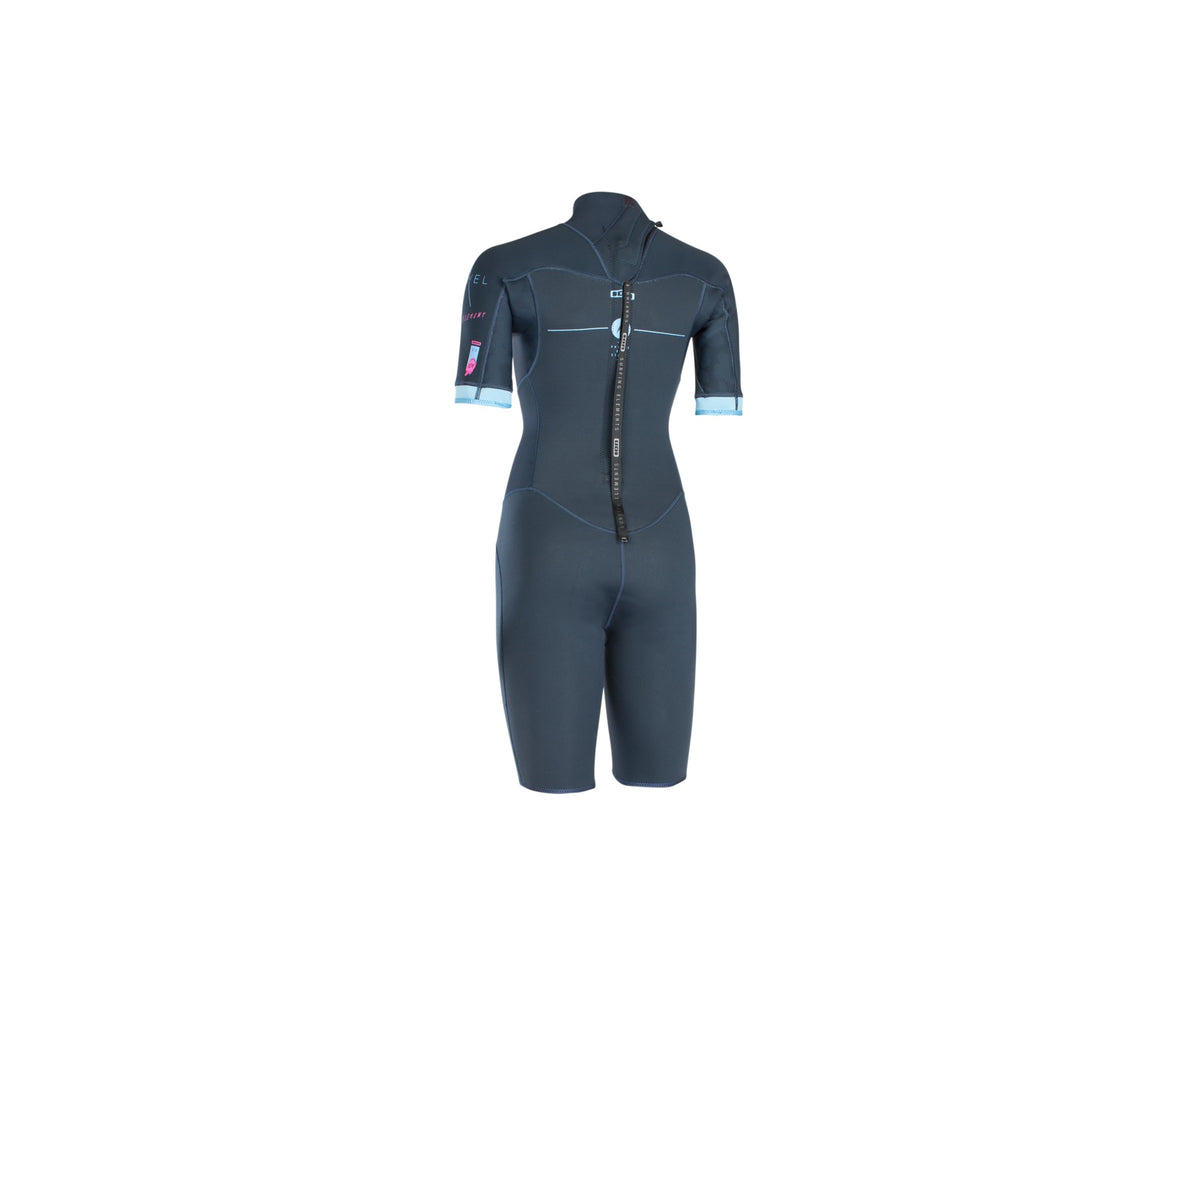 Muta da donna per kitesurf Ion Jewel Element blue con zip posteriore 2/2 dietro Kitepoint.shop Malcesine